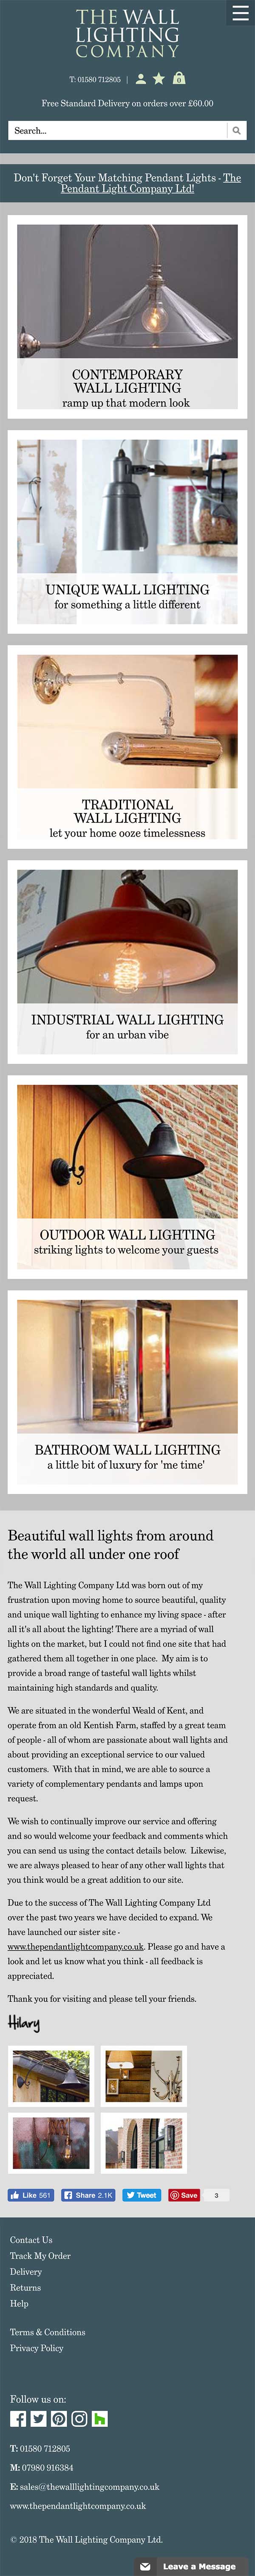 The Wall Lighting Company Website